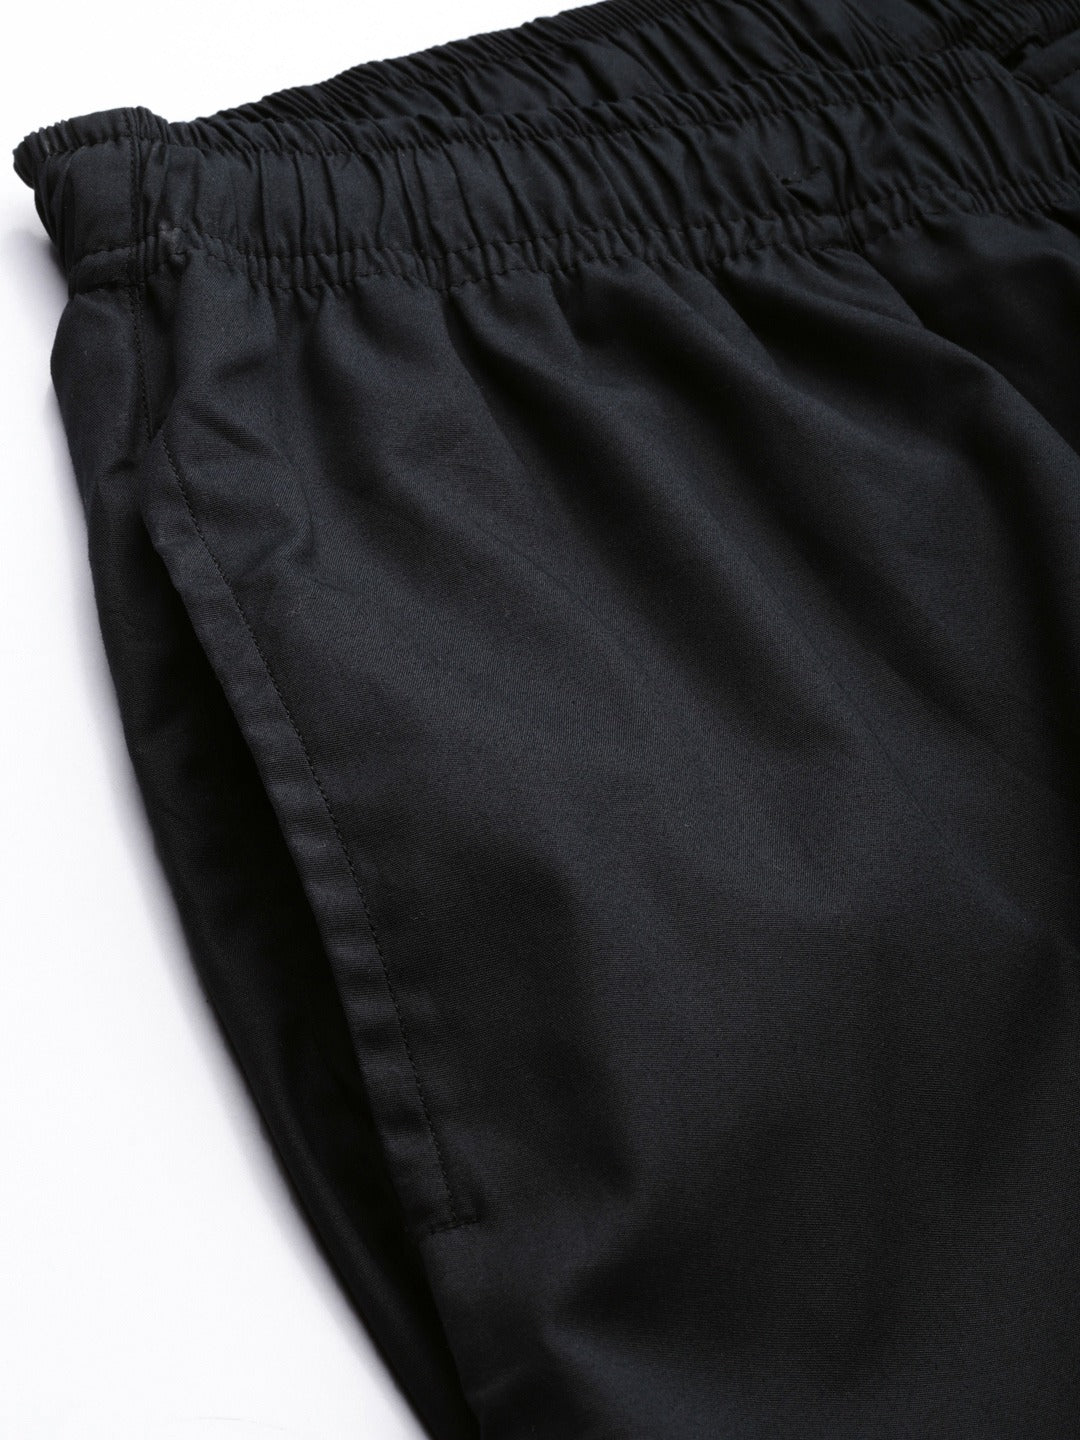 Men Black Solids Pure Cotton Regular Fit Night Wear Night Suit